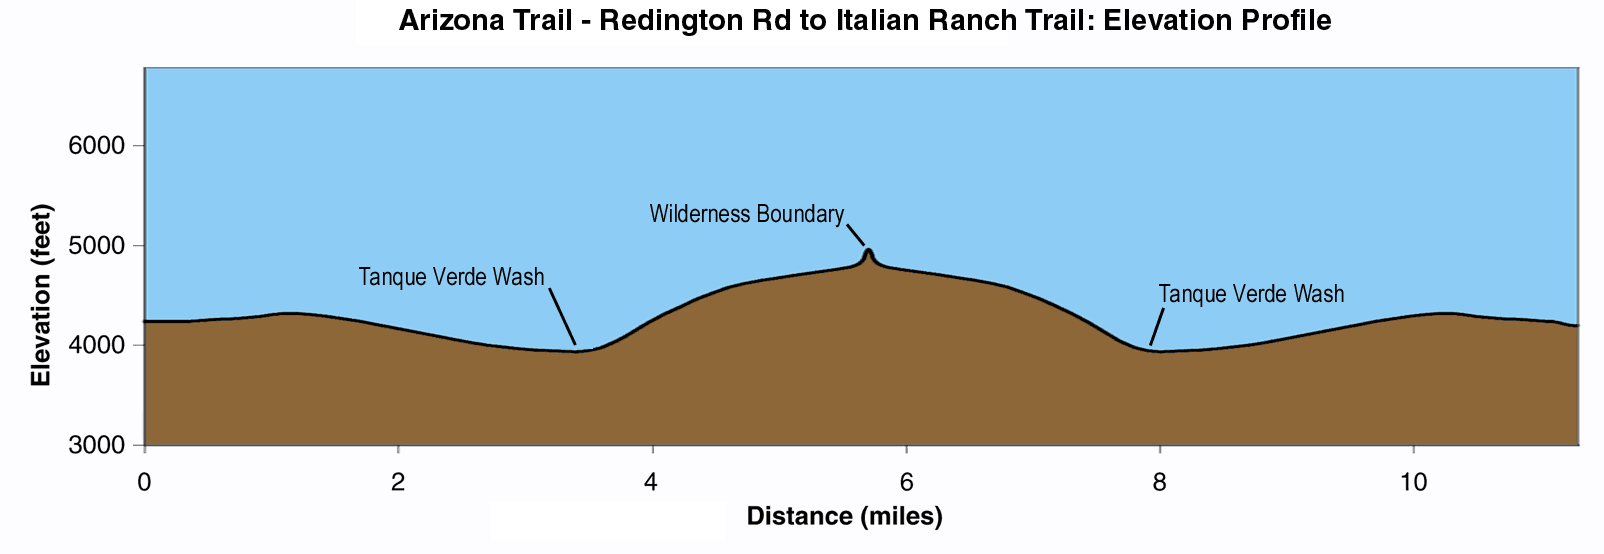 Italian Ranch Trail Elevation Profile